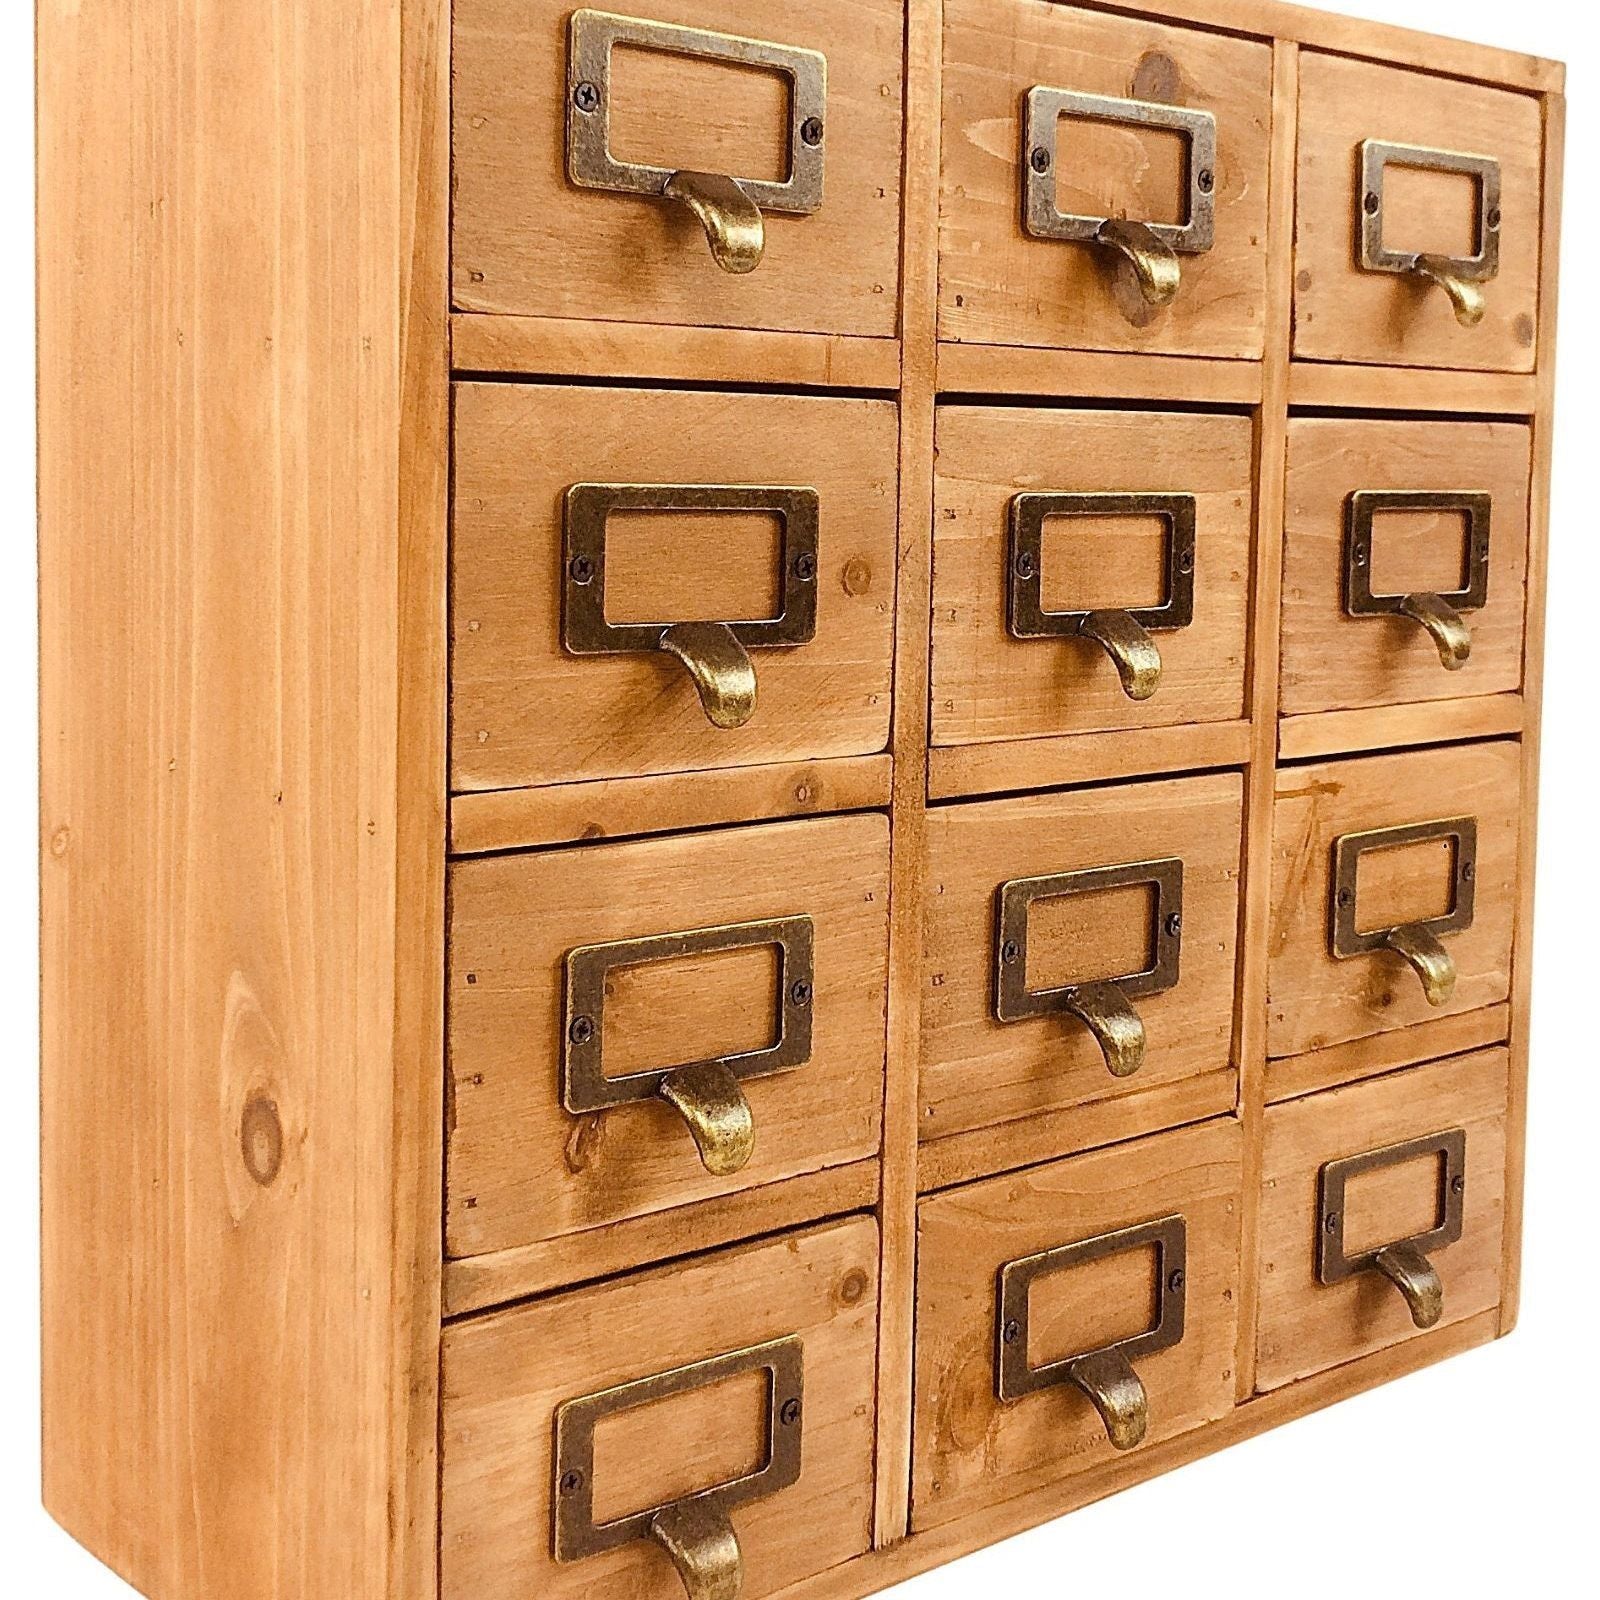 Storage Drawers (12 drawers) 35 x 15 x 34cm - Ashton and Finch